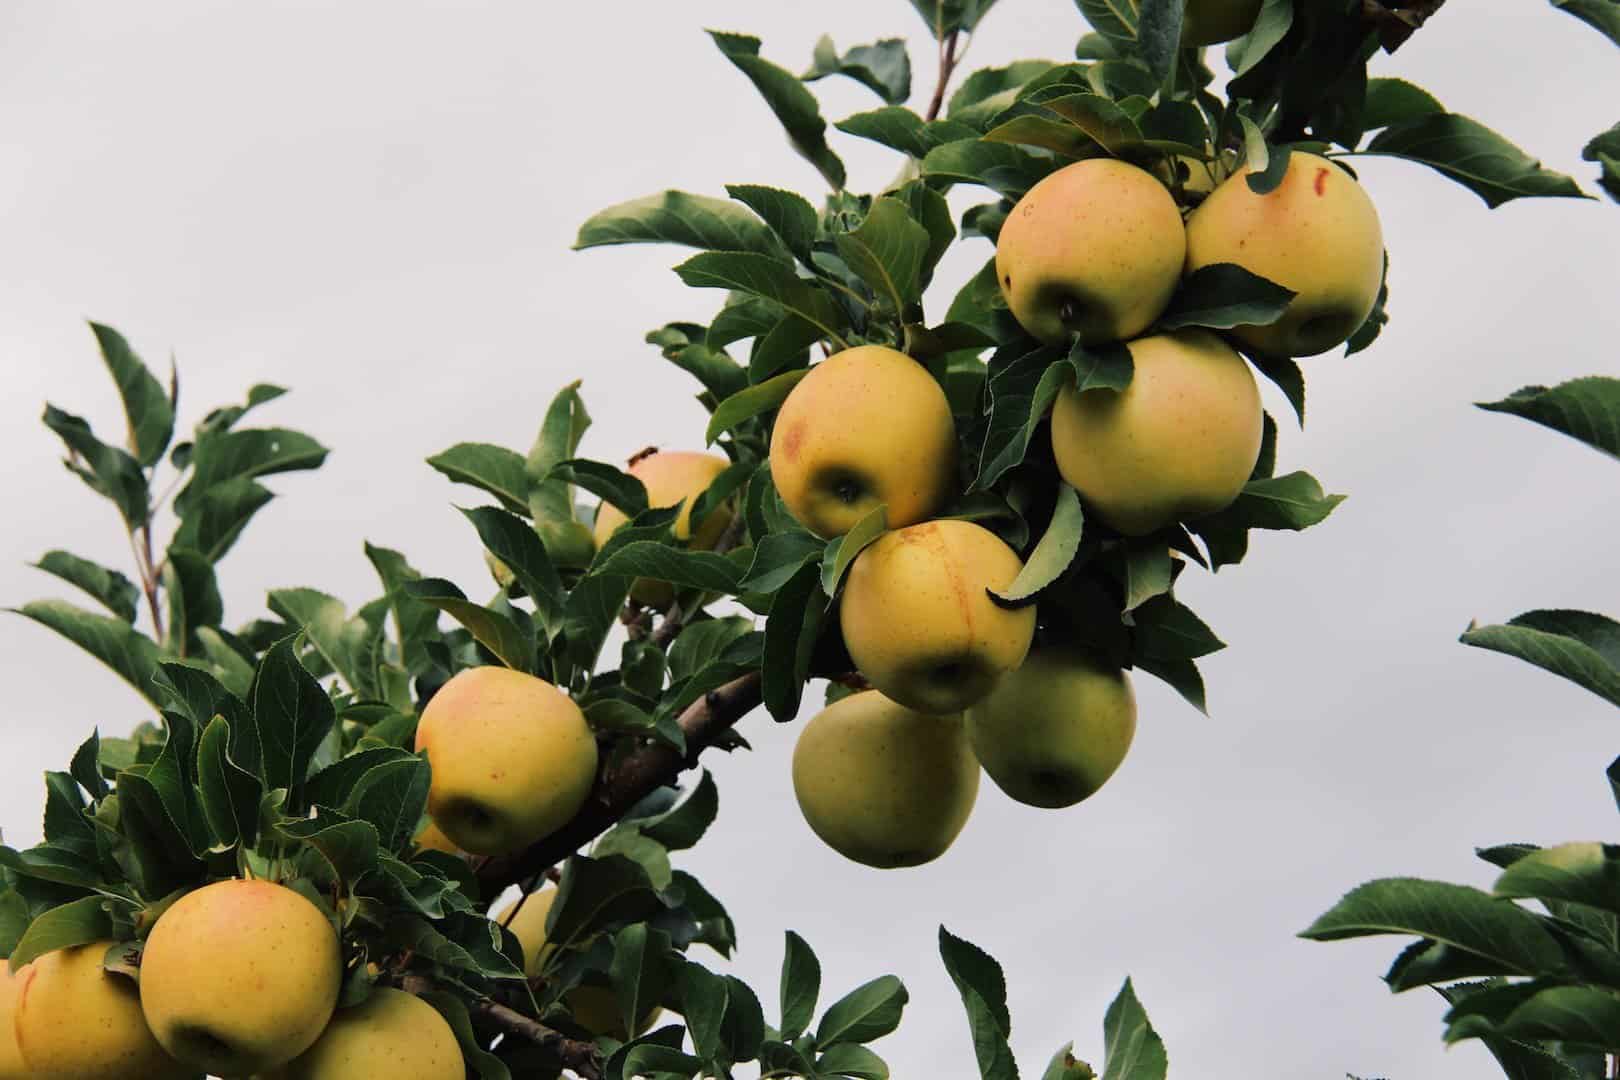 Fresh apples growing on an apple tree